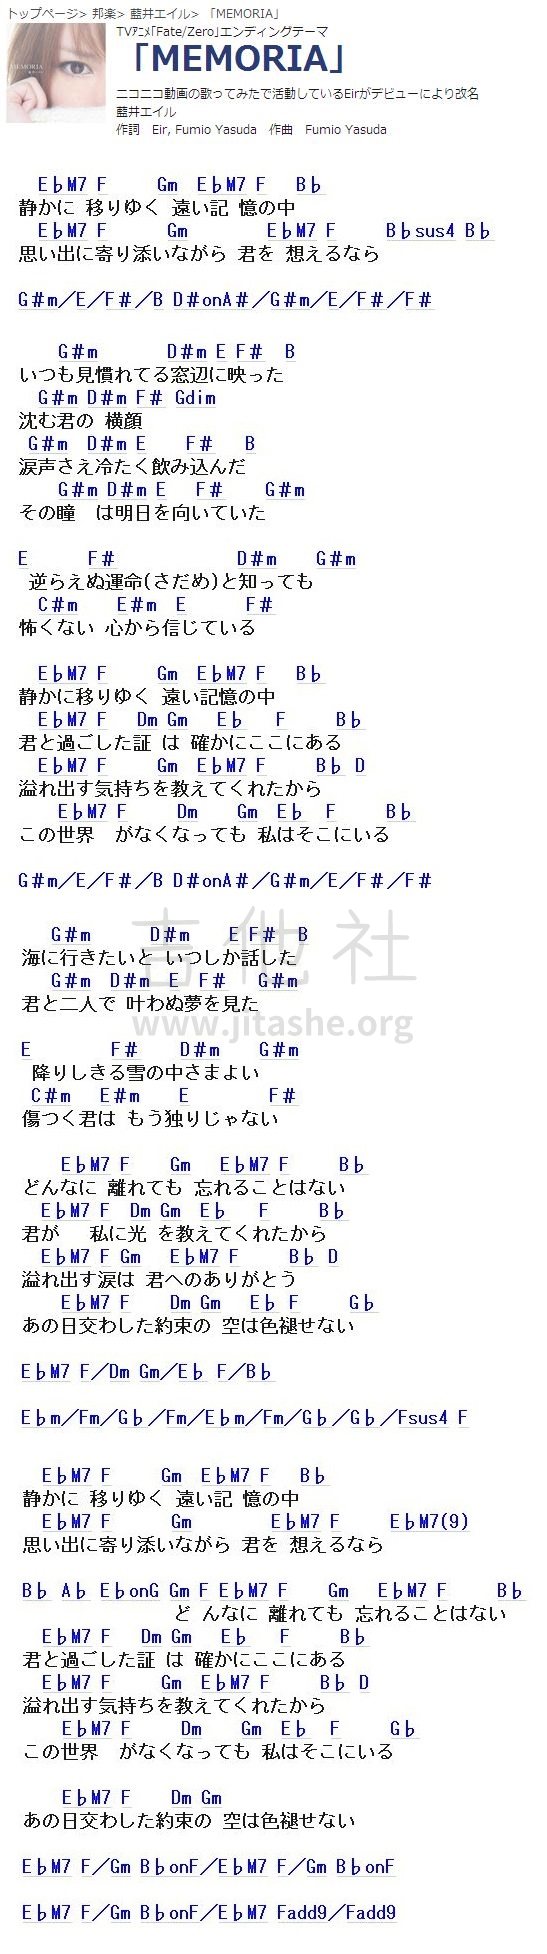 打印:MEMORIA - Fate/Zero ED1 藍井エイル - 【图片谱】【和弦谱】吉他谱_蓝井艾露(Aoi Eir / 藍井エイル)_MEMORIA - FateZero ED1 藍井エイル .JPG